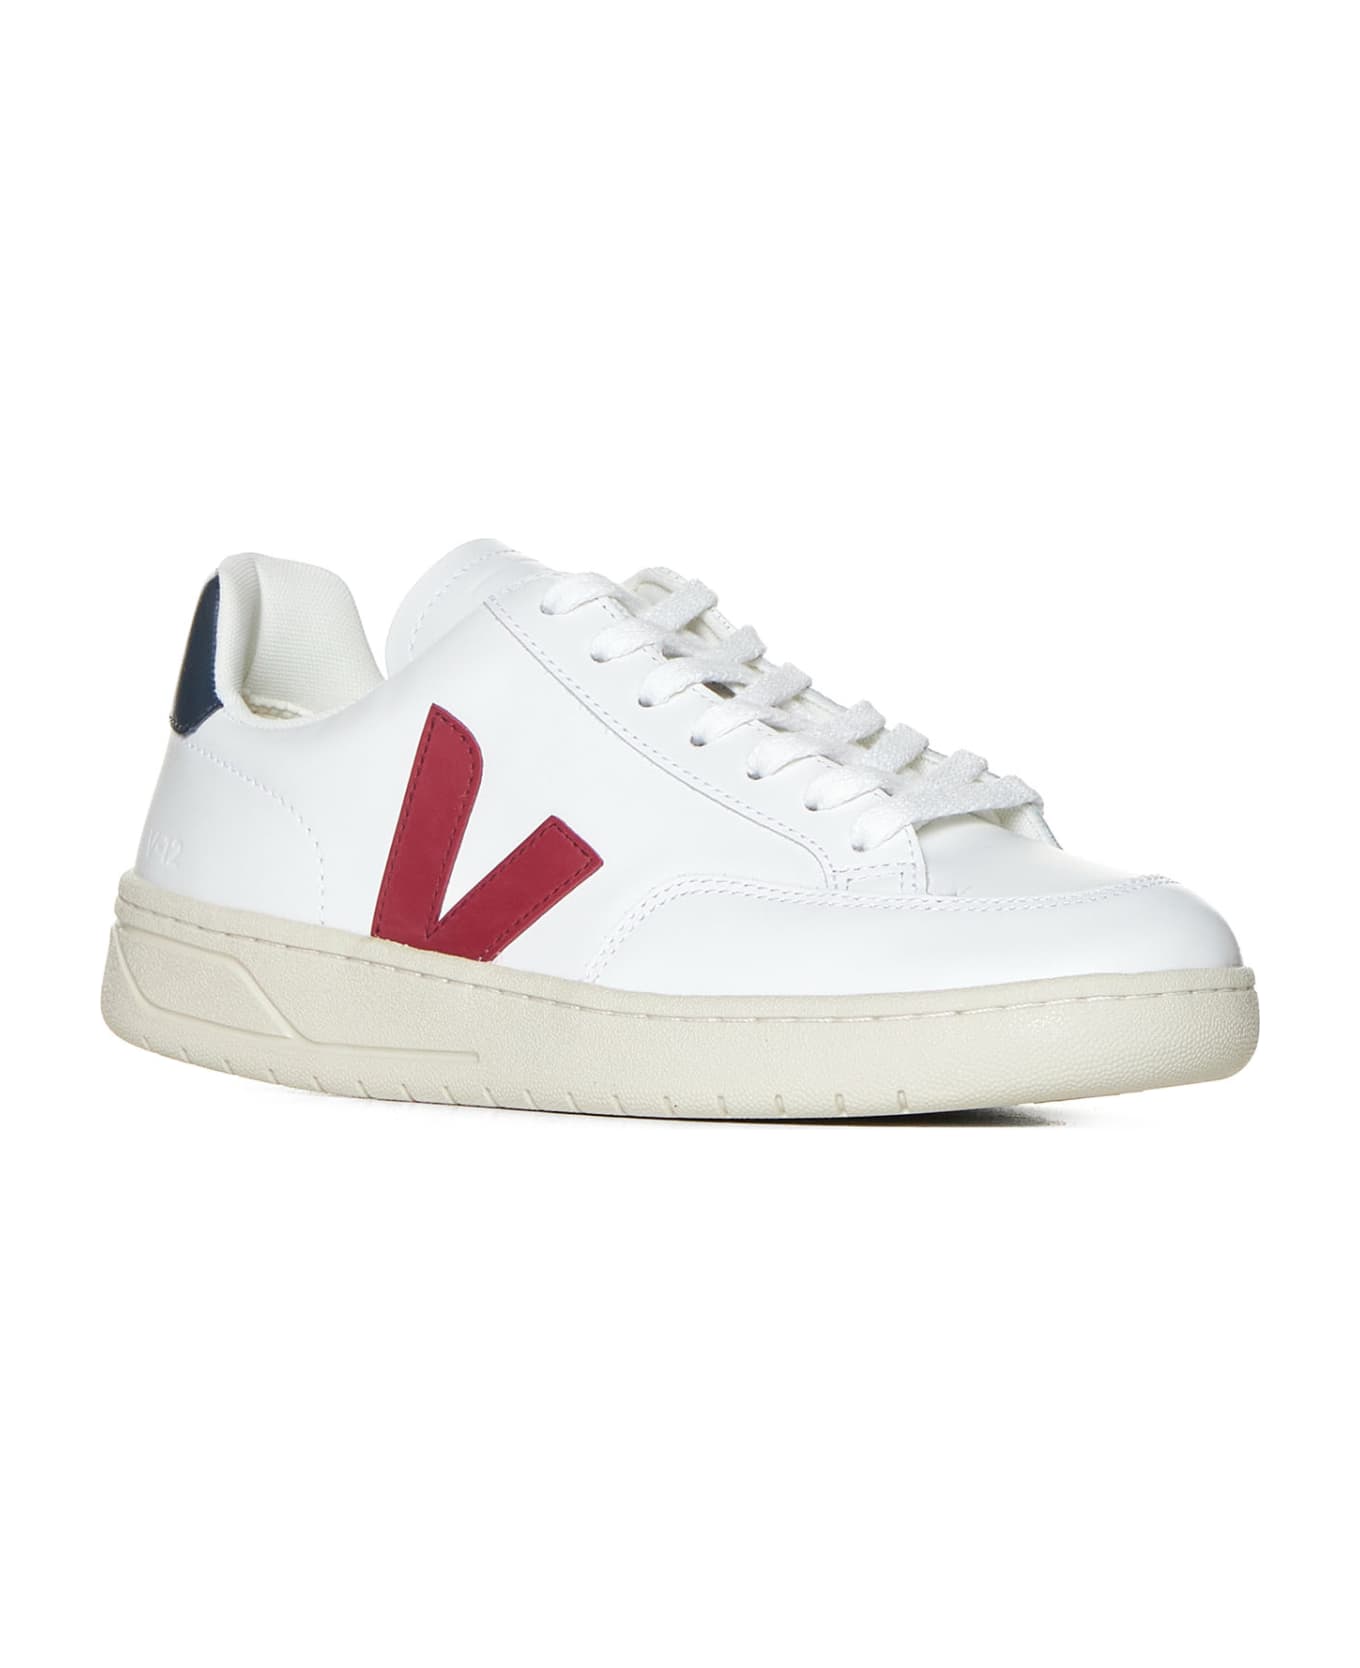 Veja Sneakers - Extra-white_marsala_nautico スニーカー